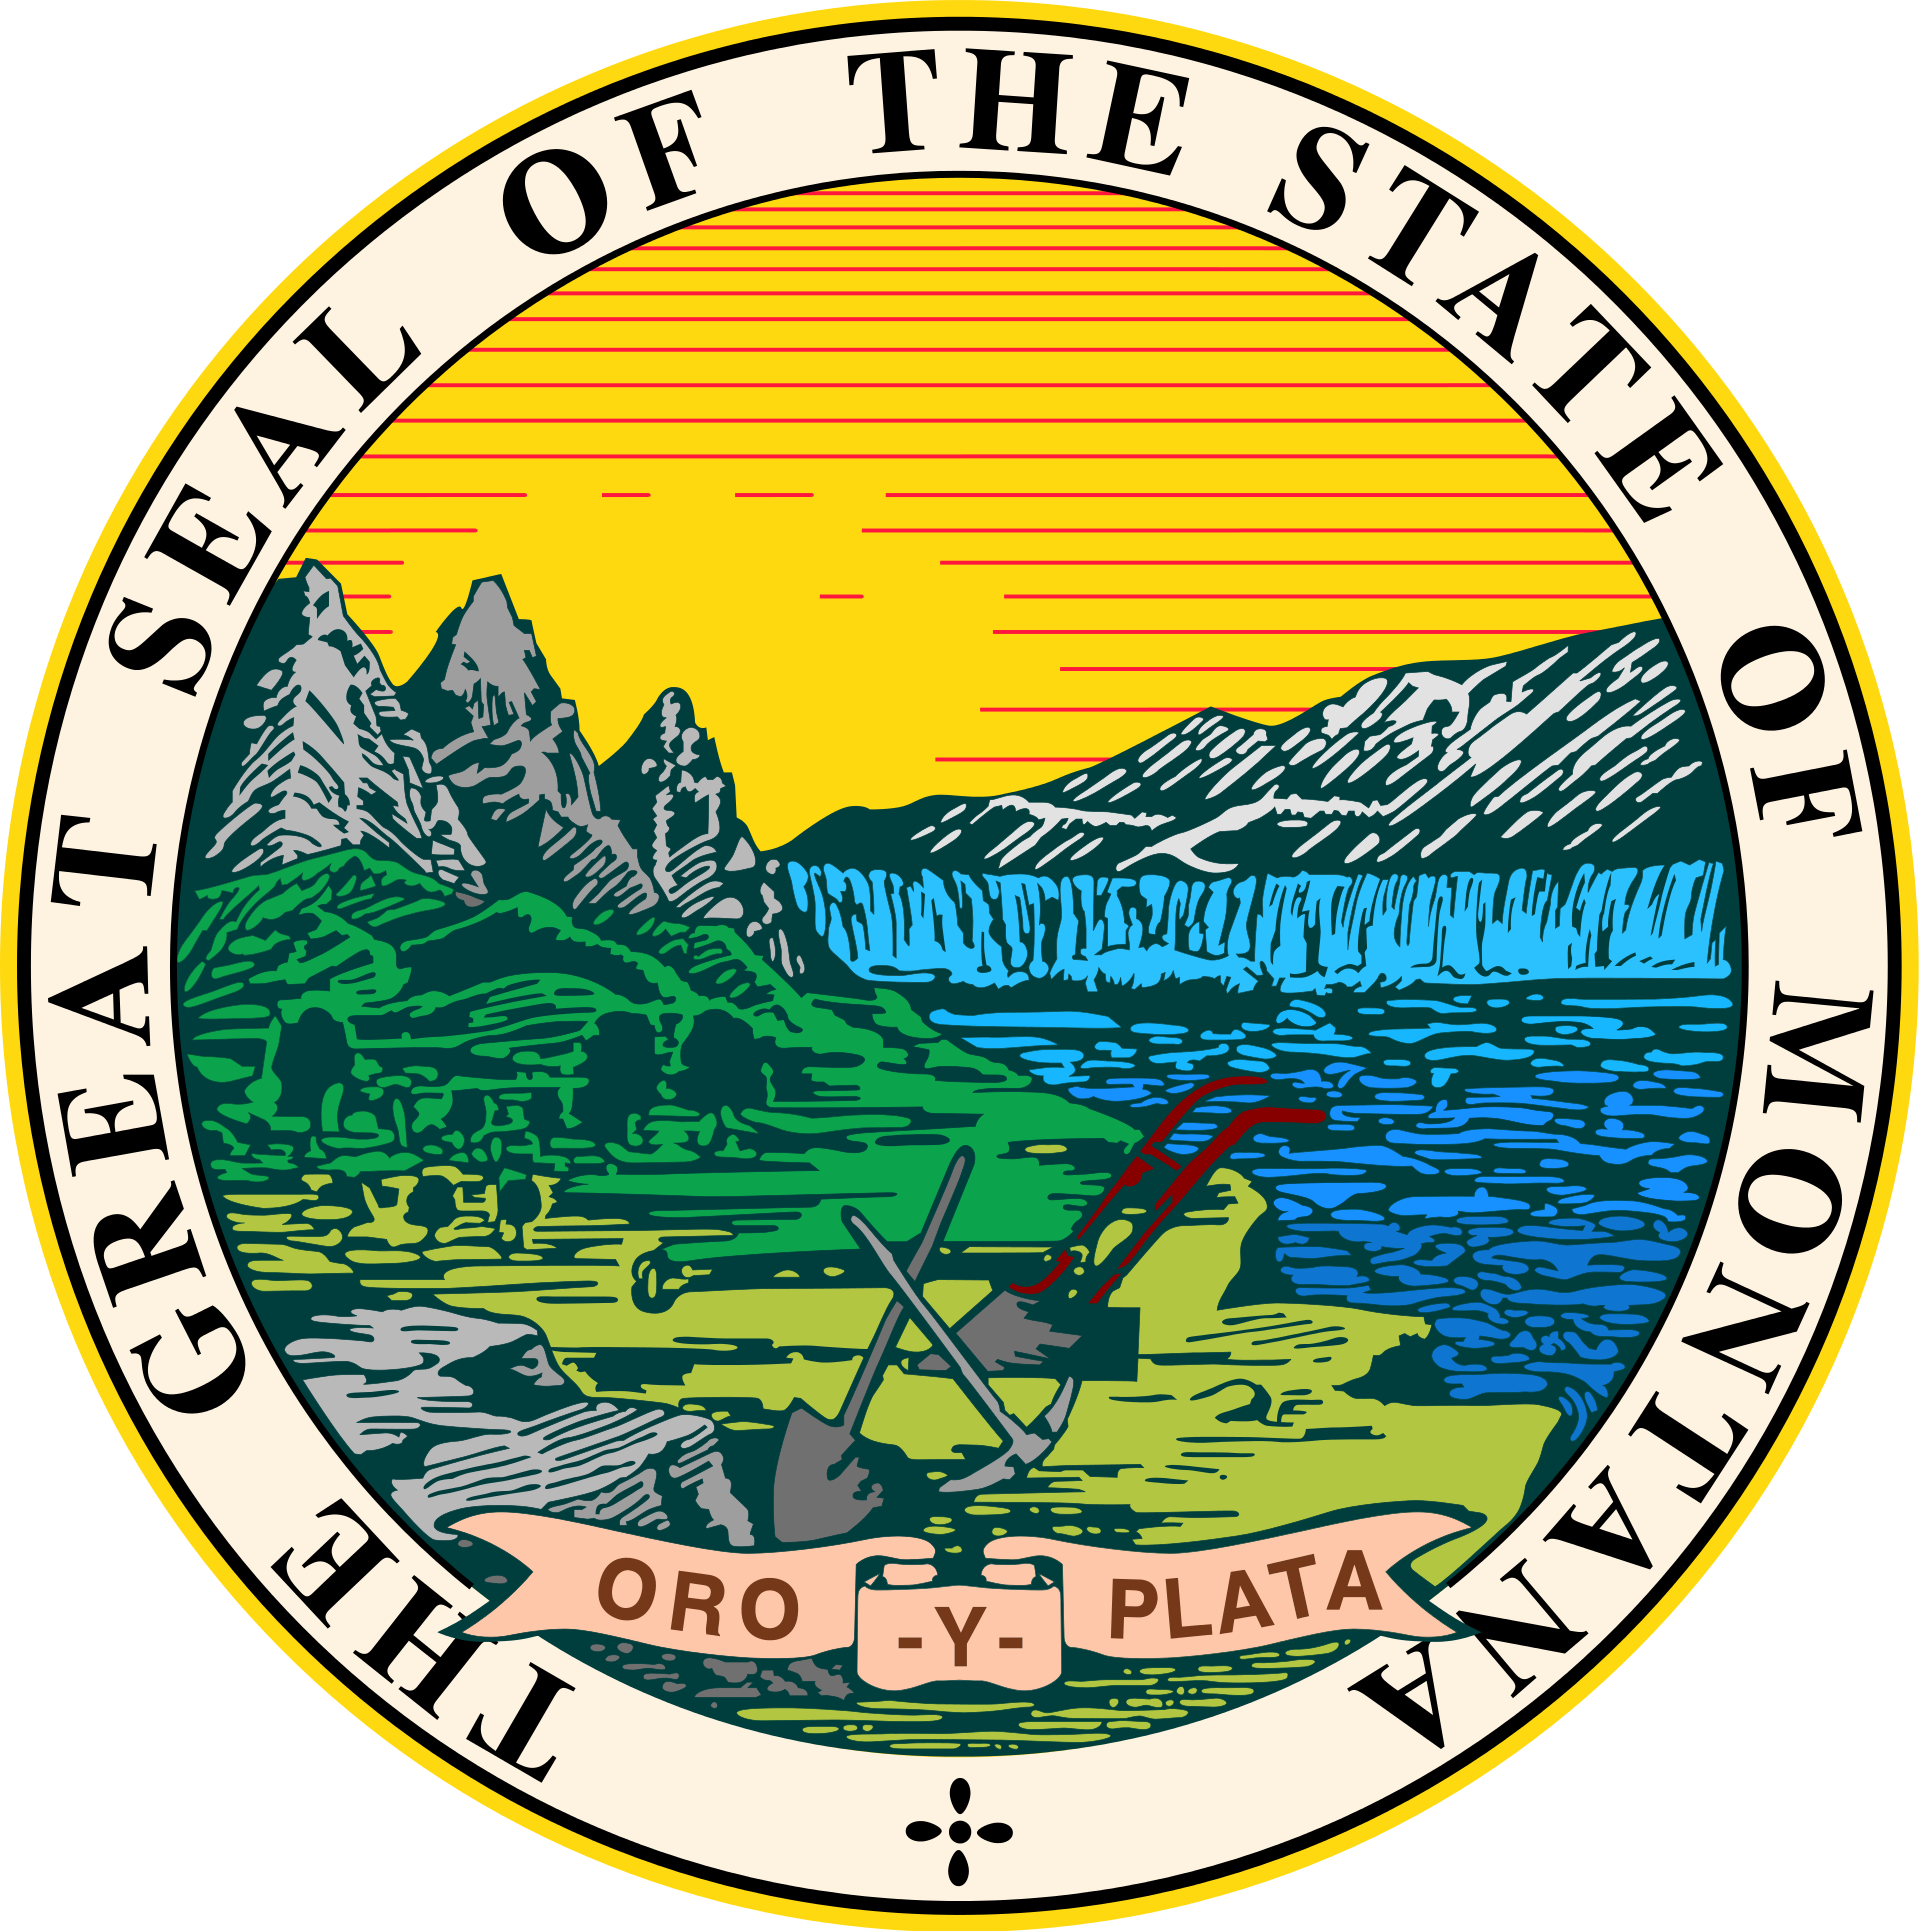 Montana Senate - Wikipedia